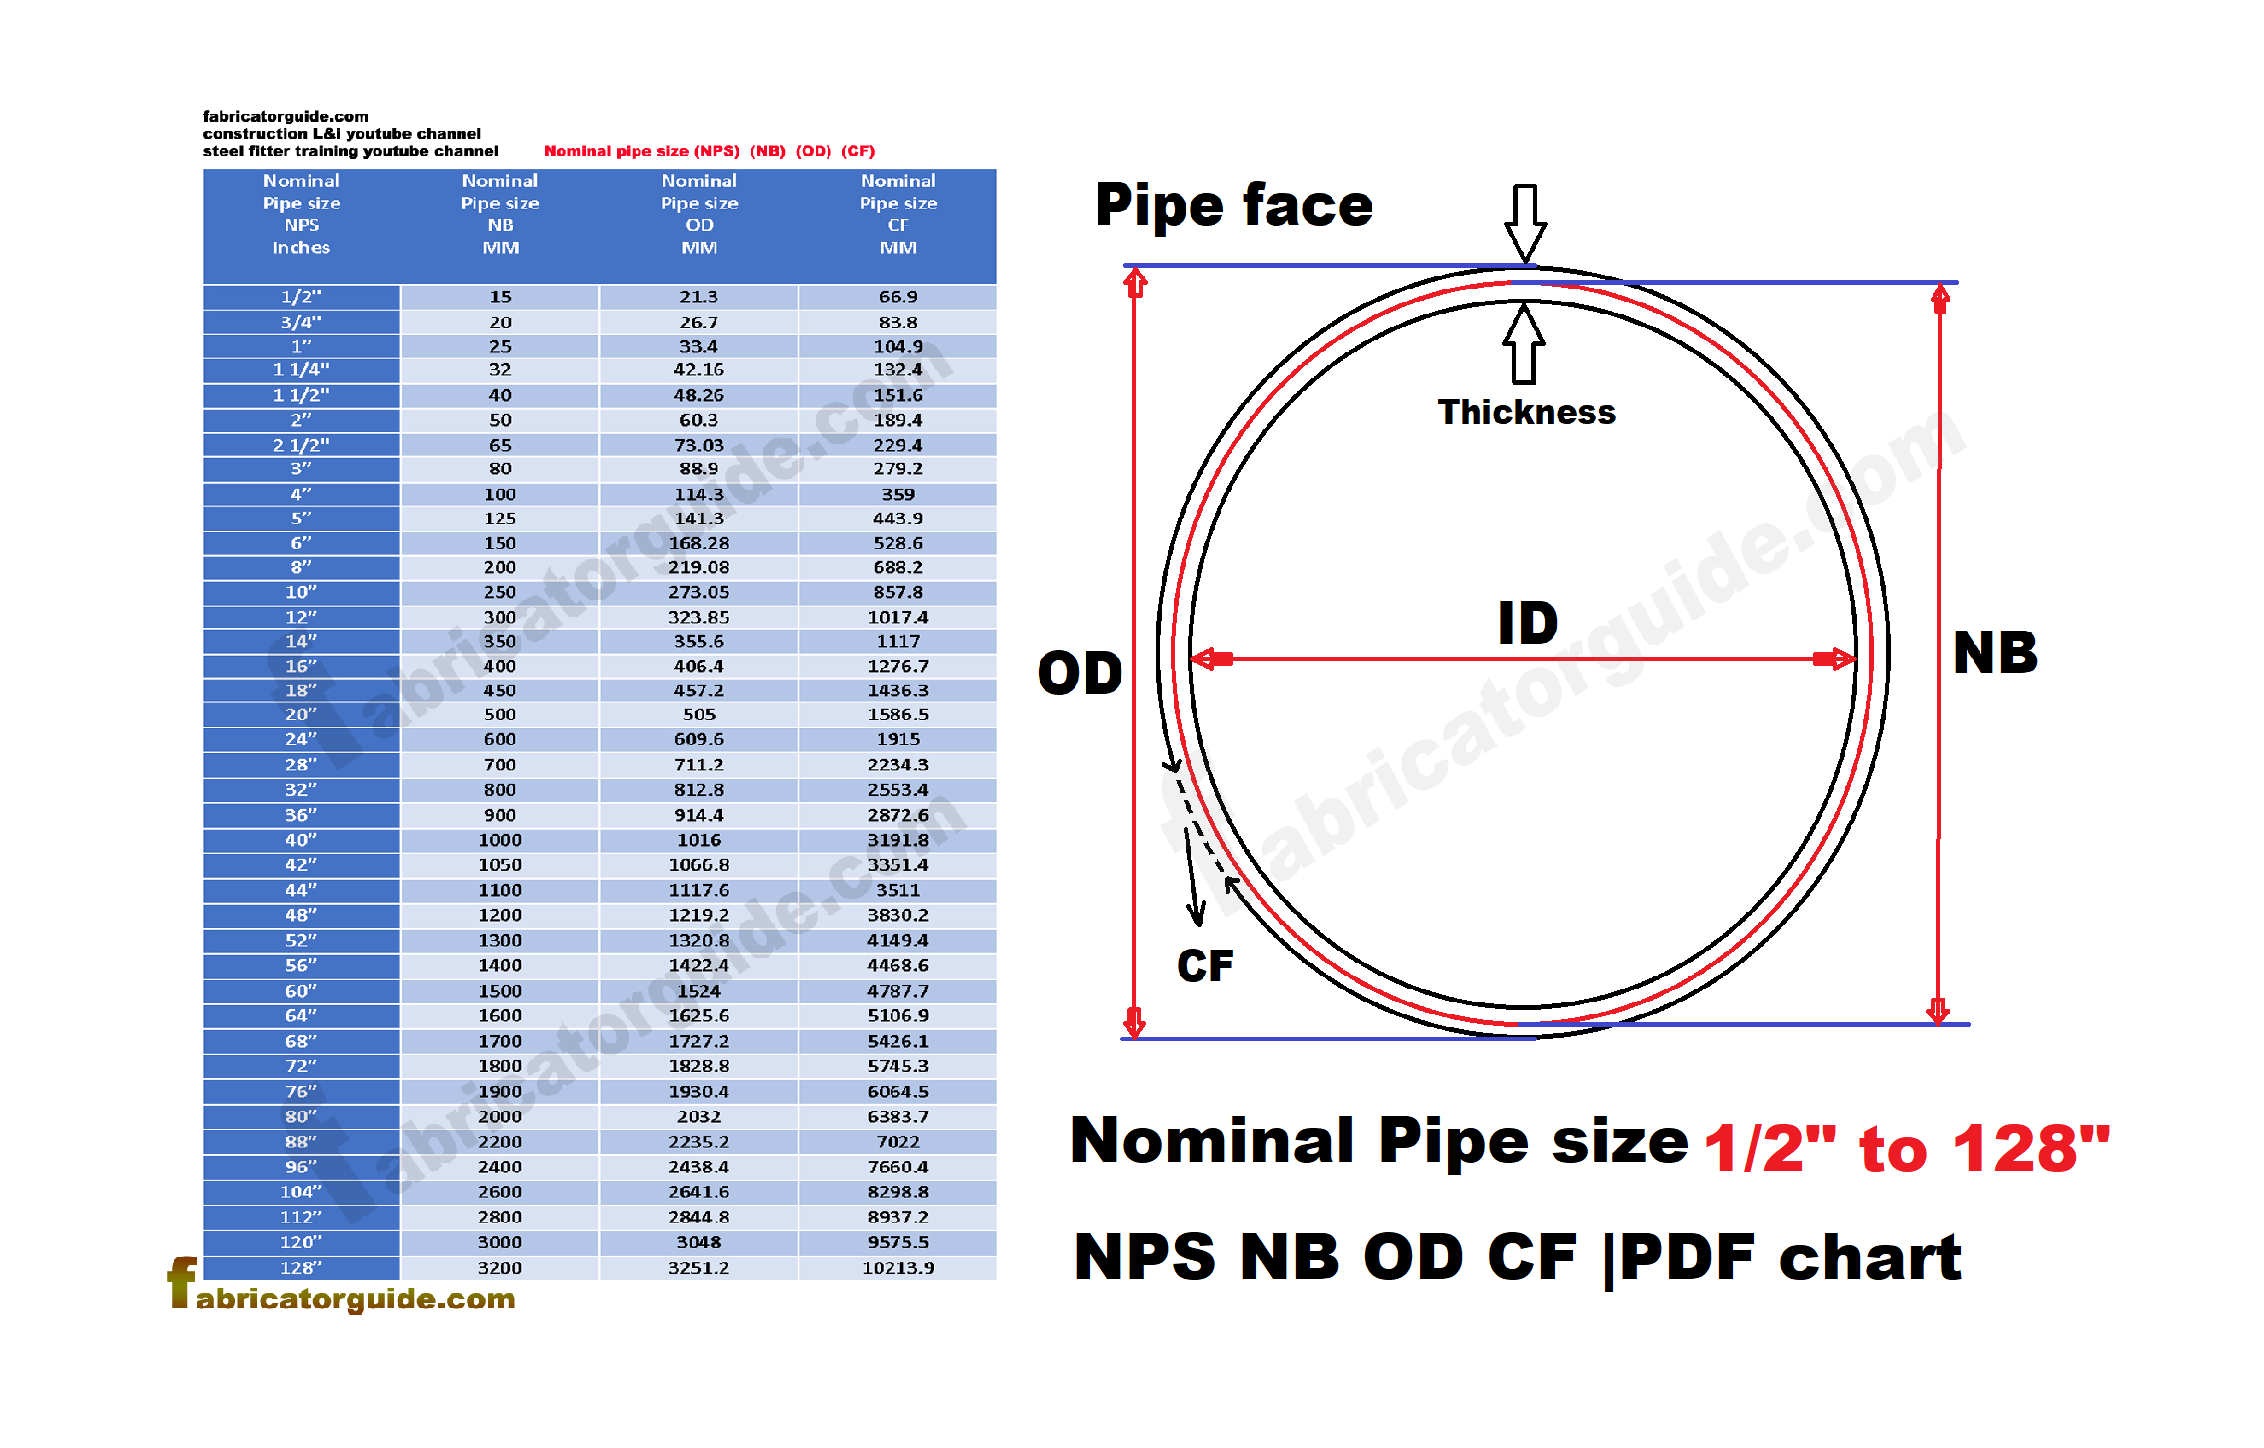 Nominal Pipe size NPS NB OD CF PDF chart 1/2" to 128"